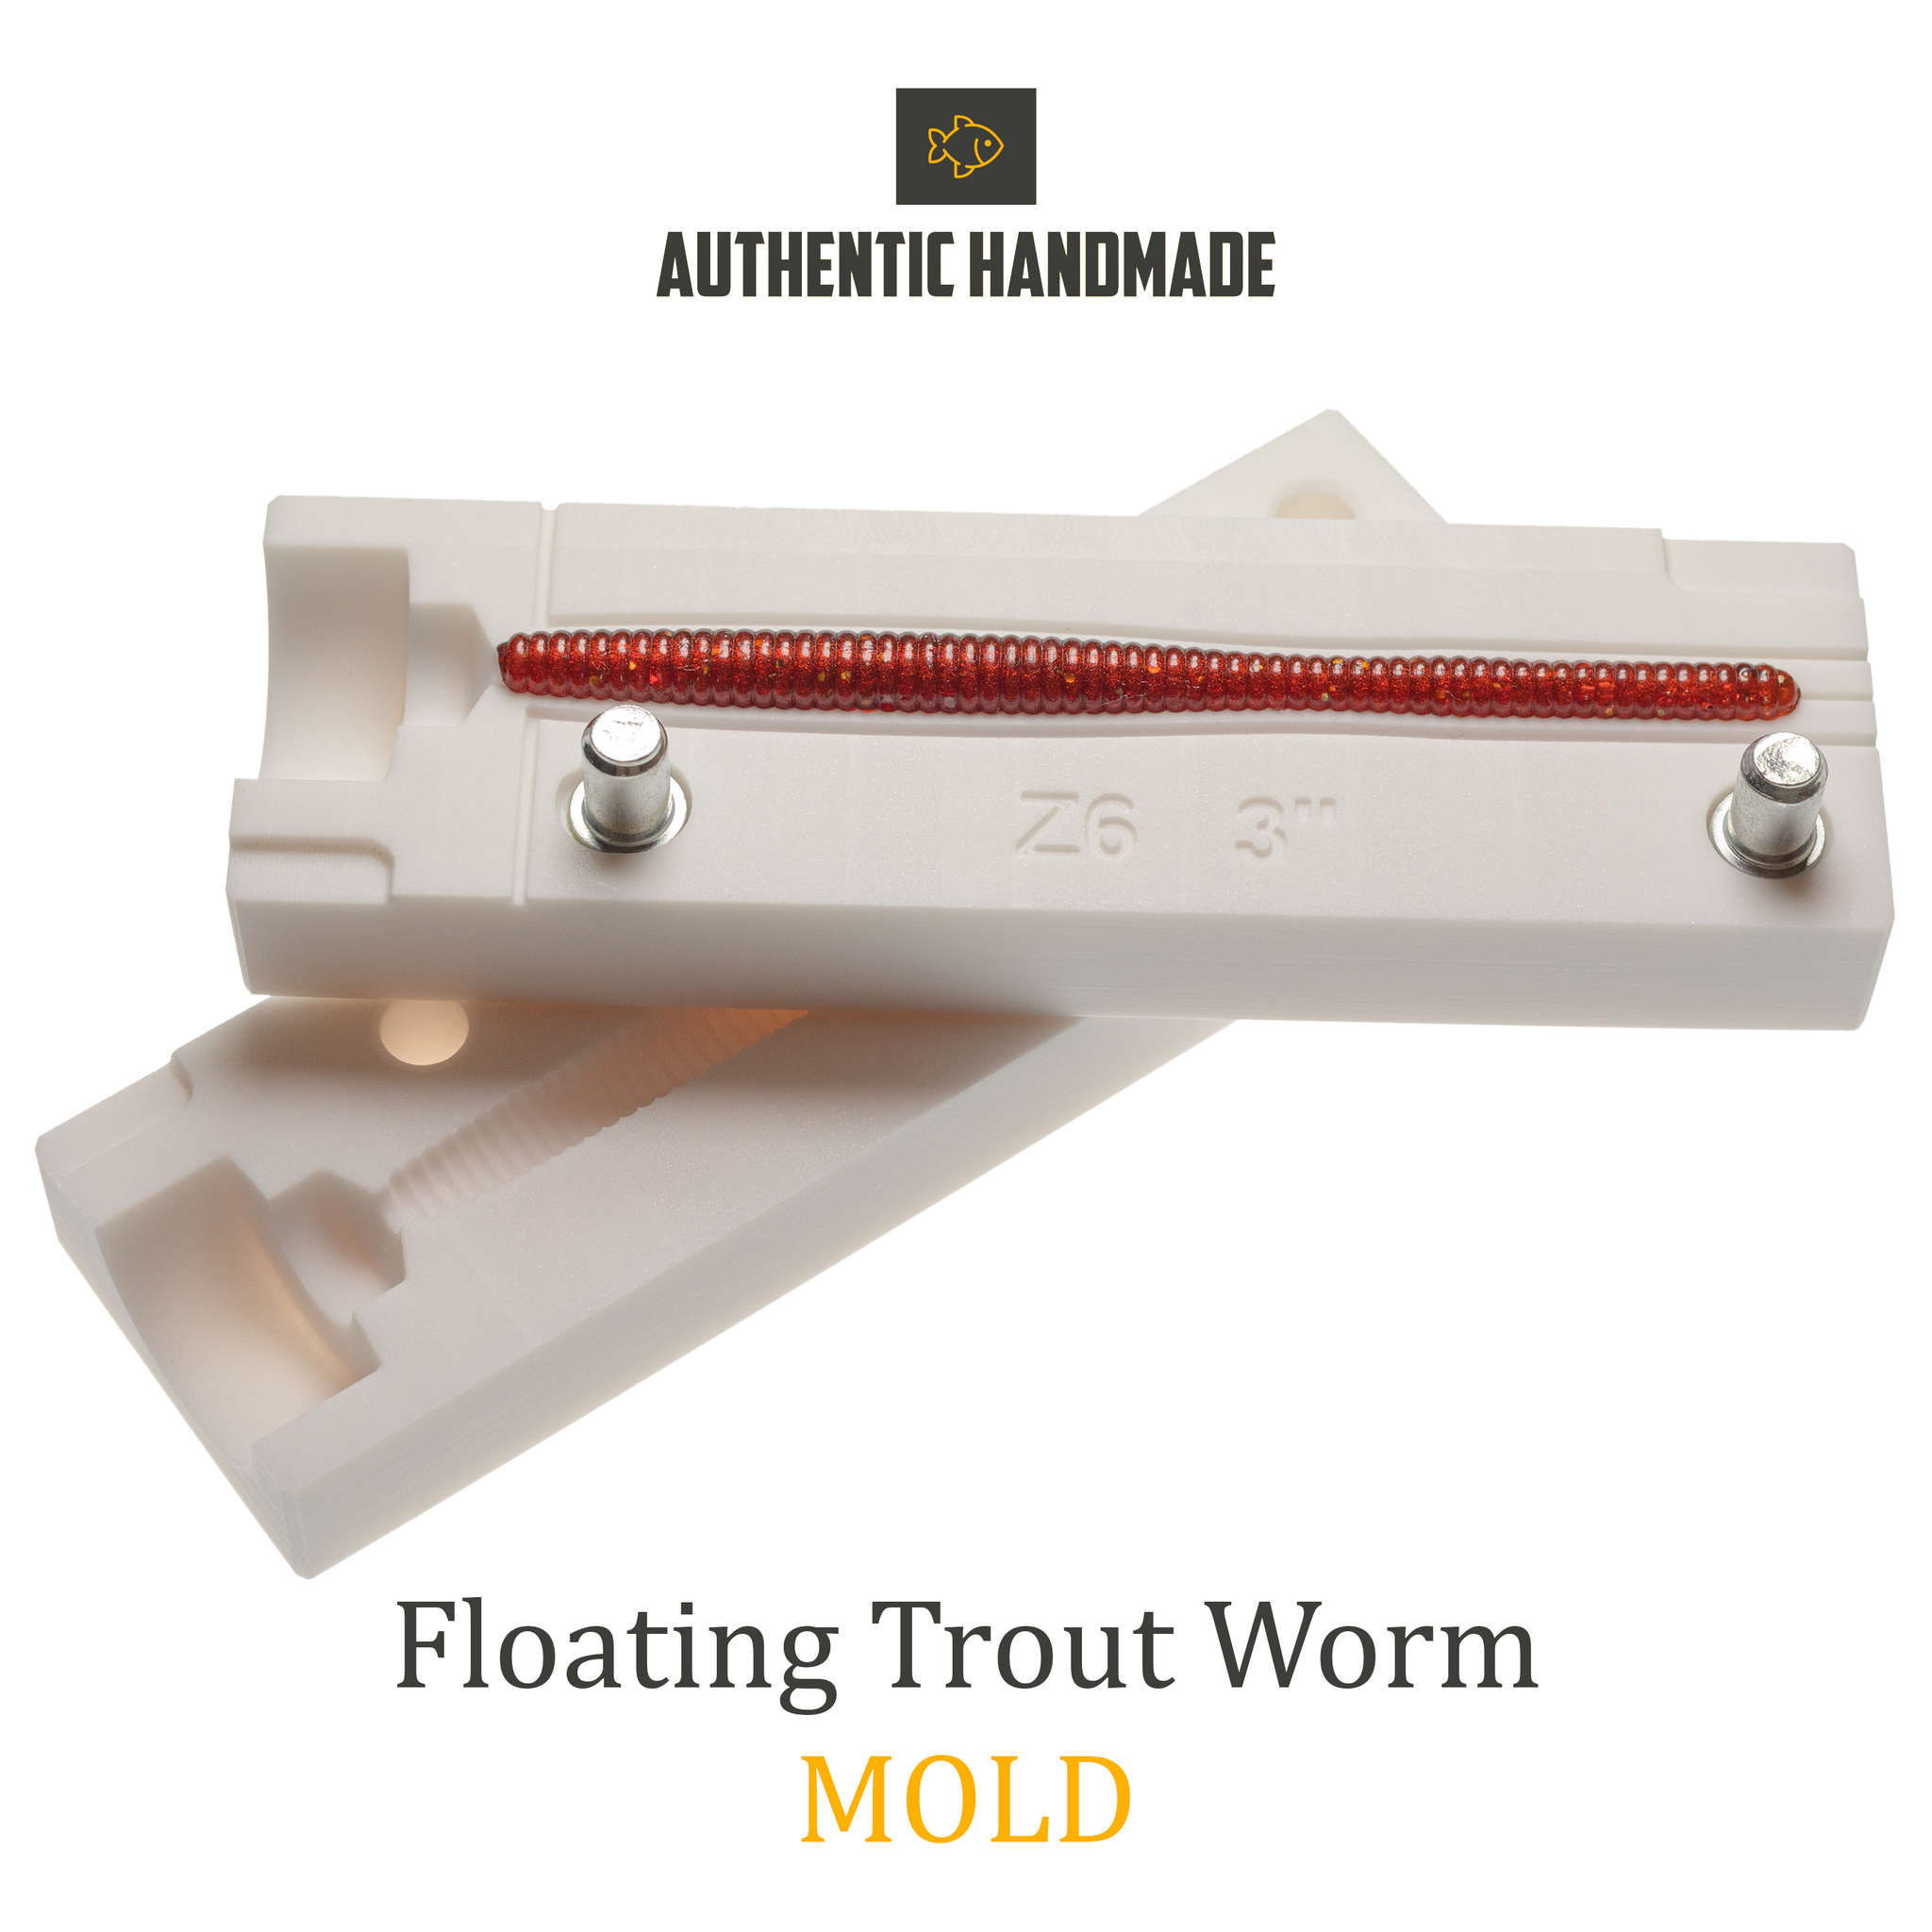 Floating Trout Worm Soft Plastic Bait Mold DIY Lure – Authentic